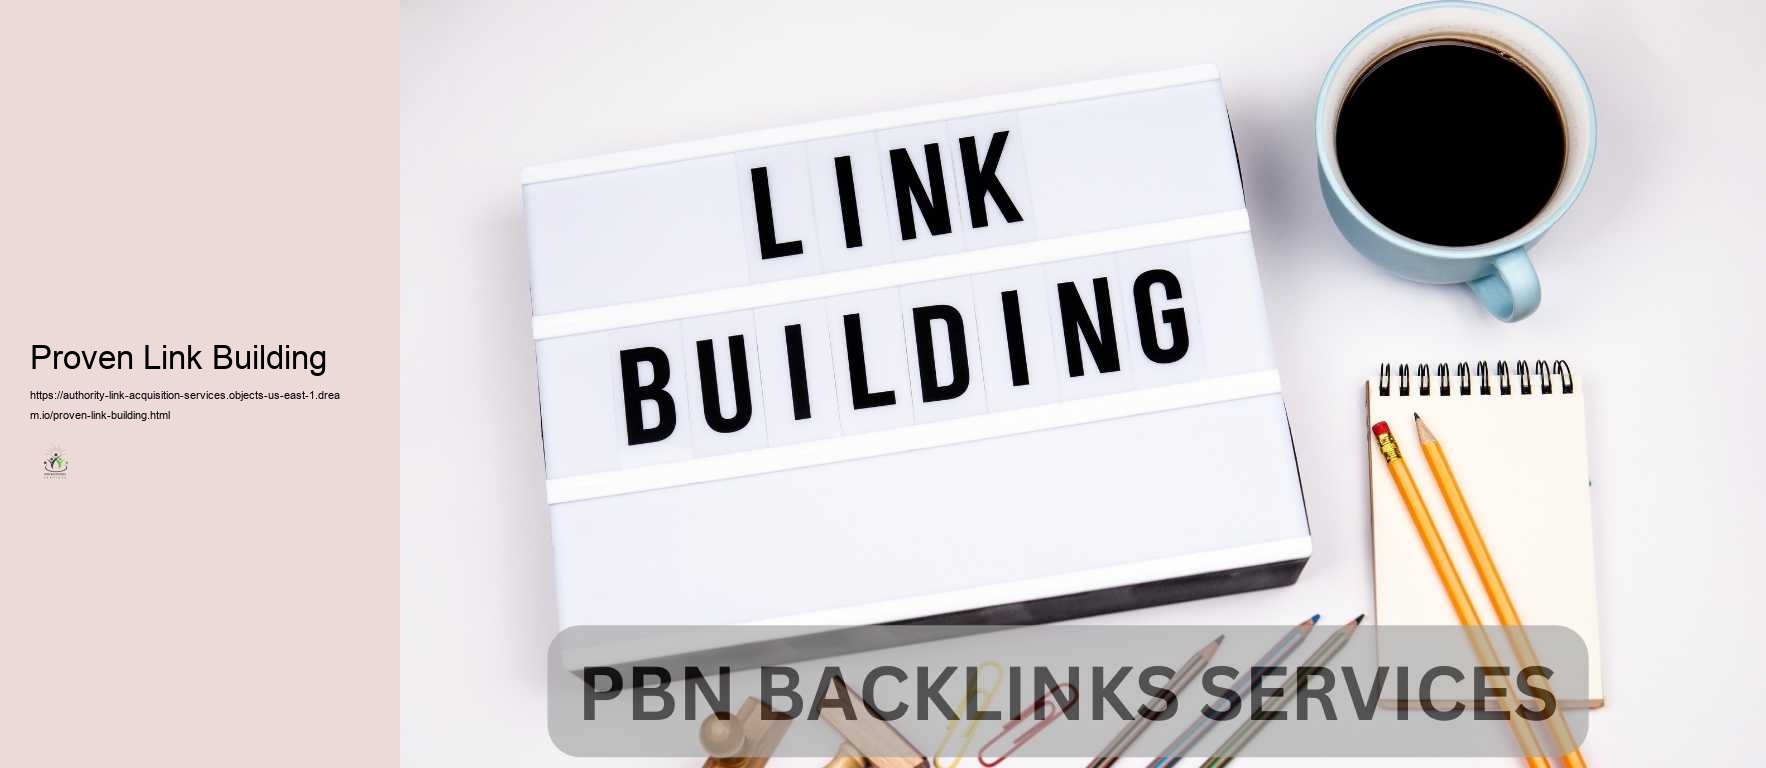 Proven Link Building